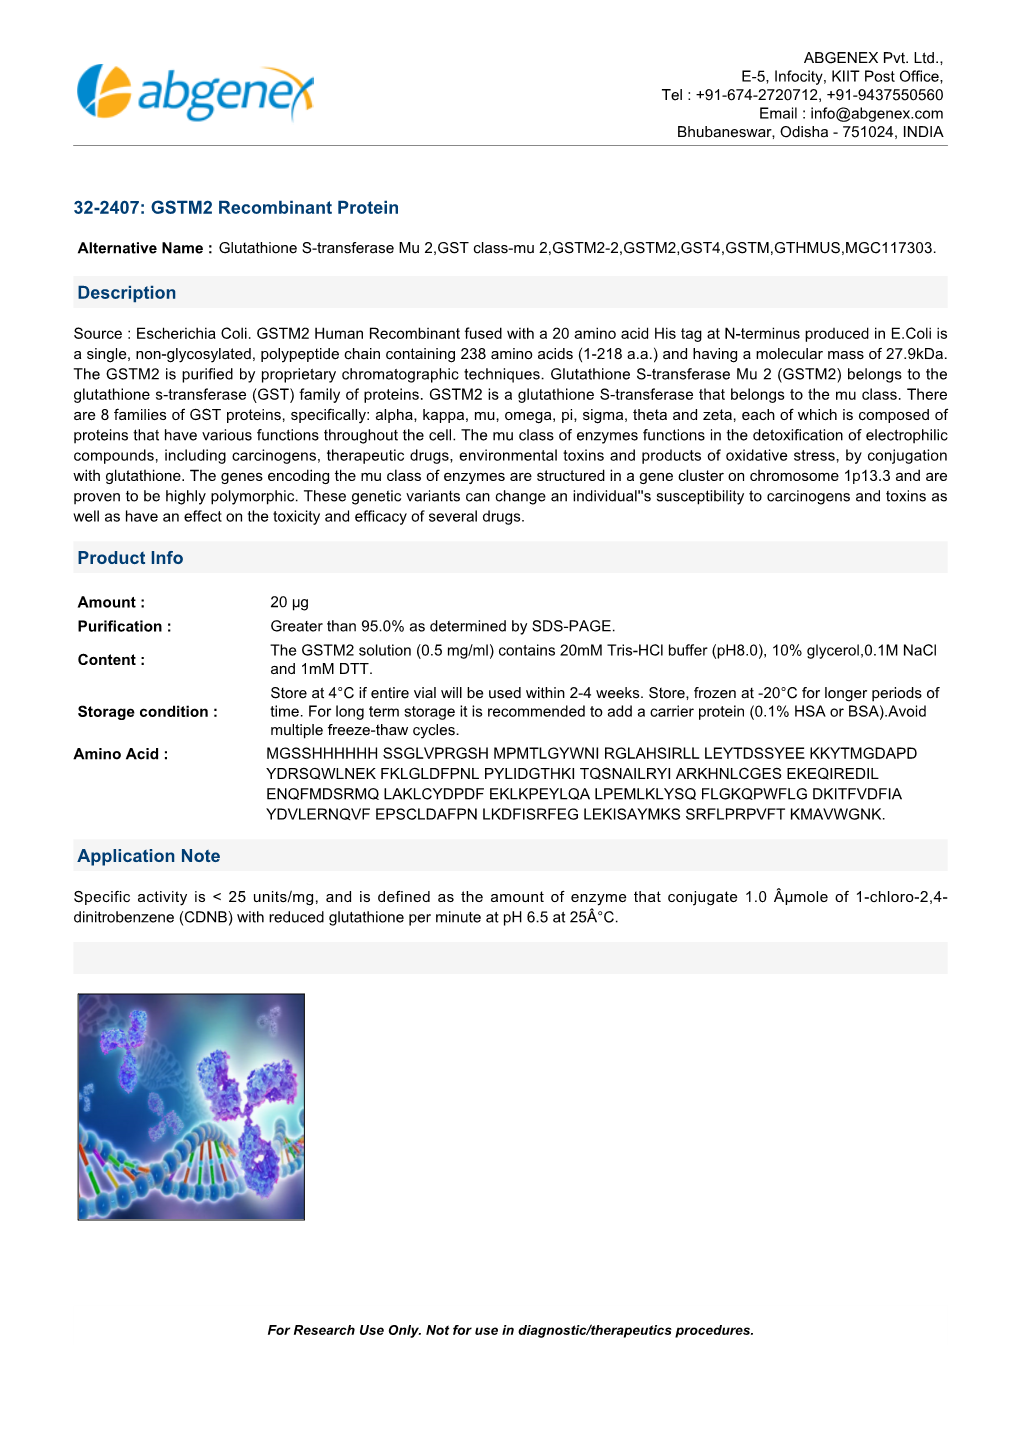 32-2407: GSTM2 Recombinant Protein Description Product Info